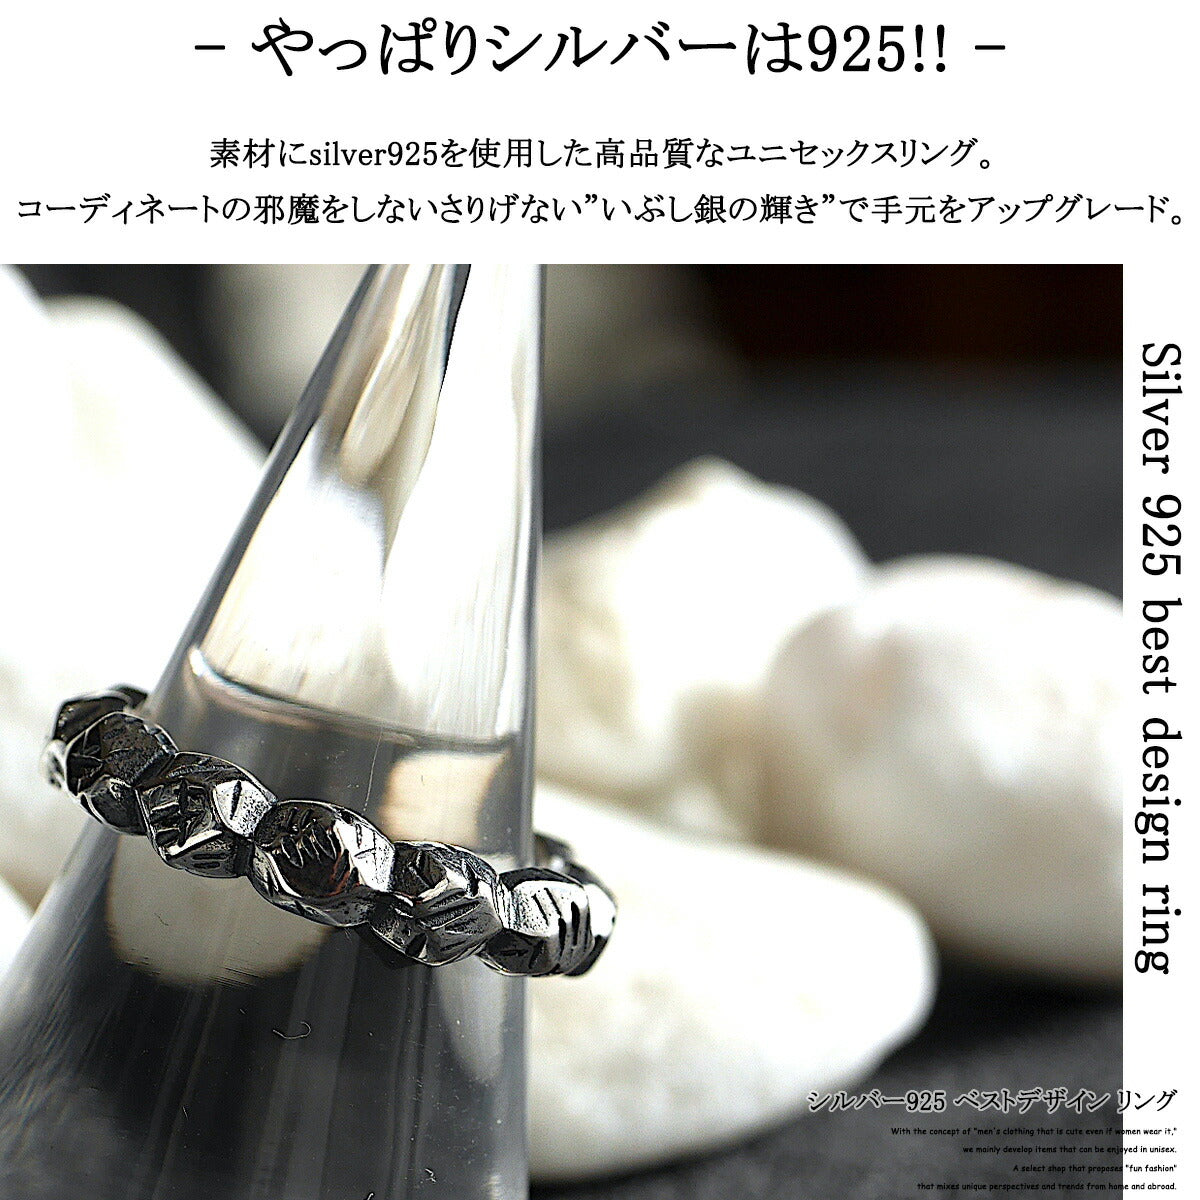 shopTOM■新品■ 可愛い デザイン S925 シルバー925 リング ヴィンテージ 指輪